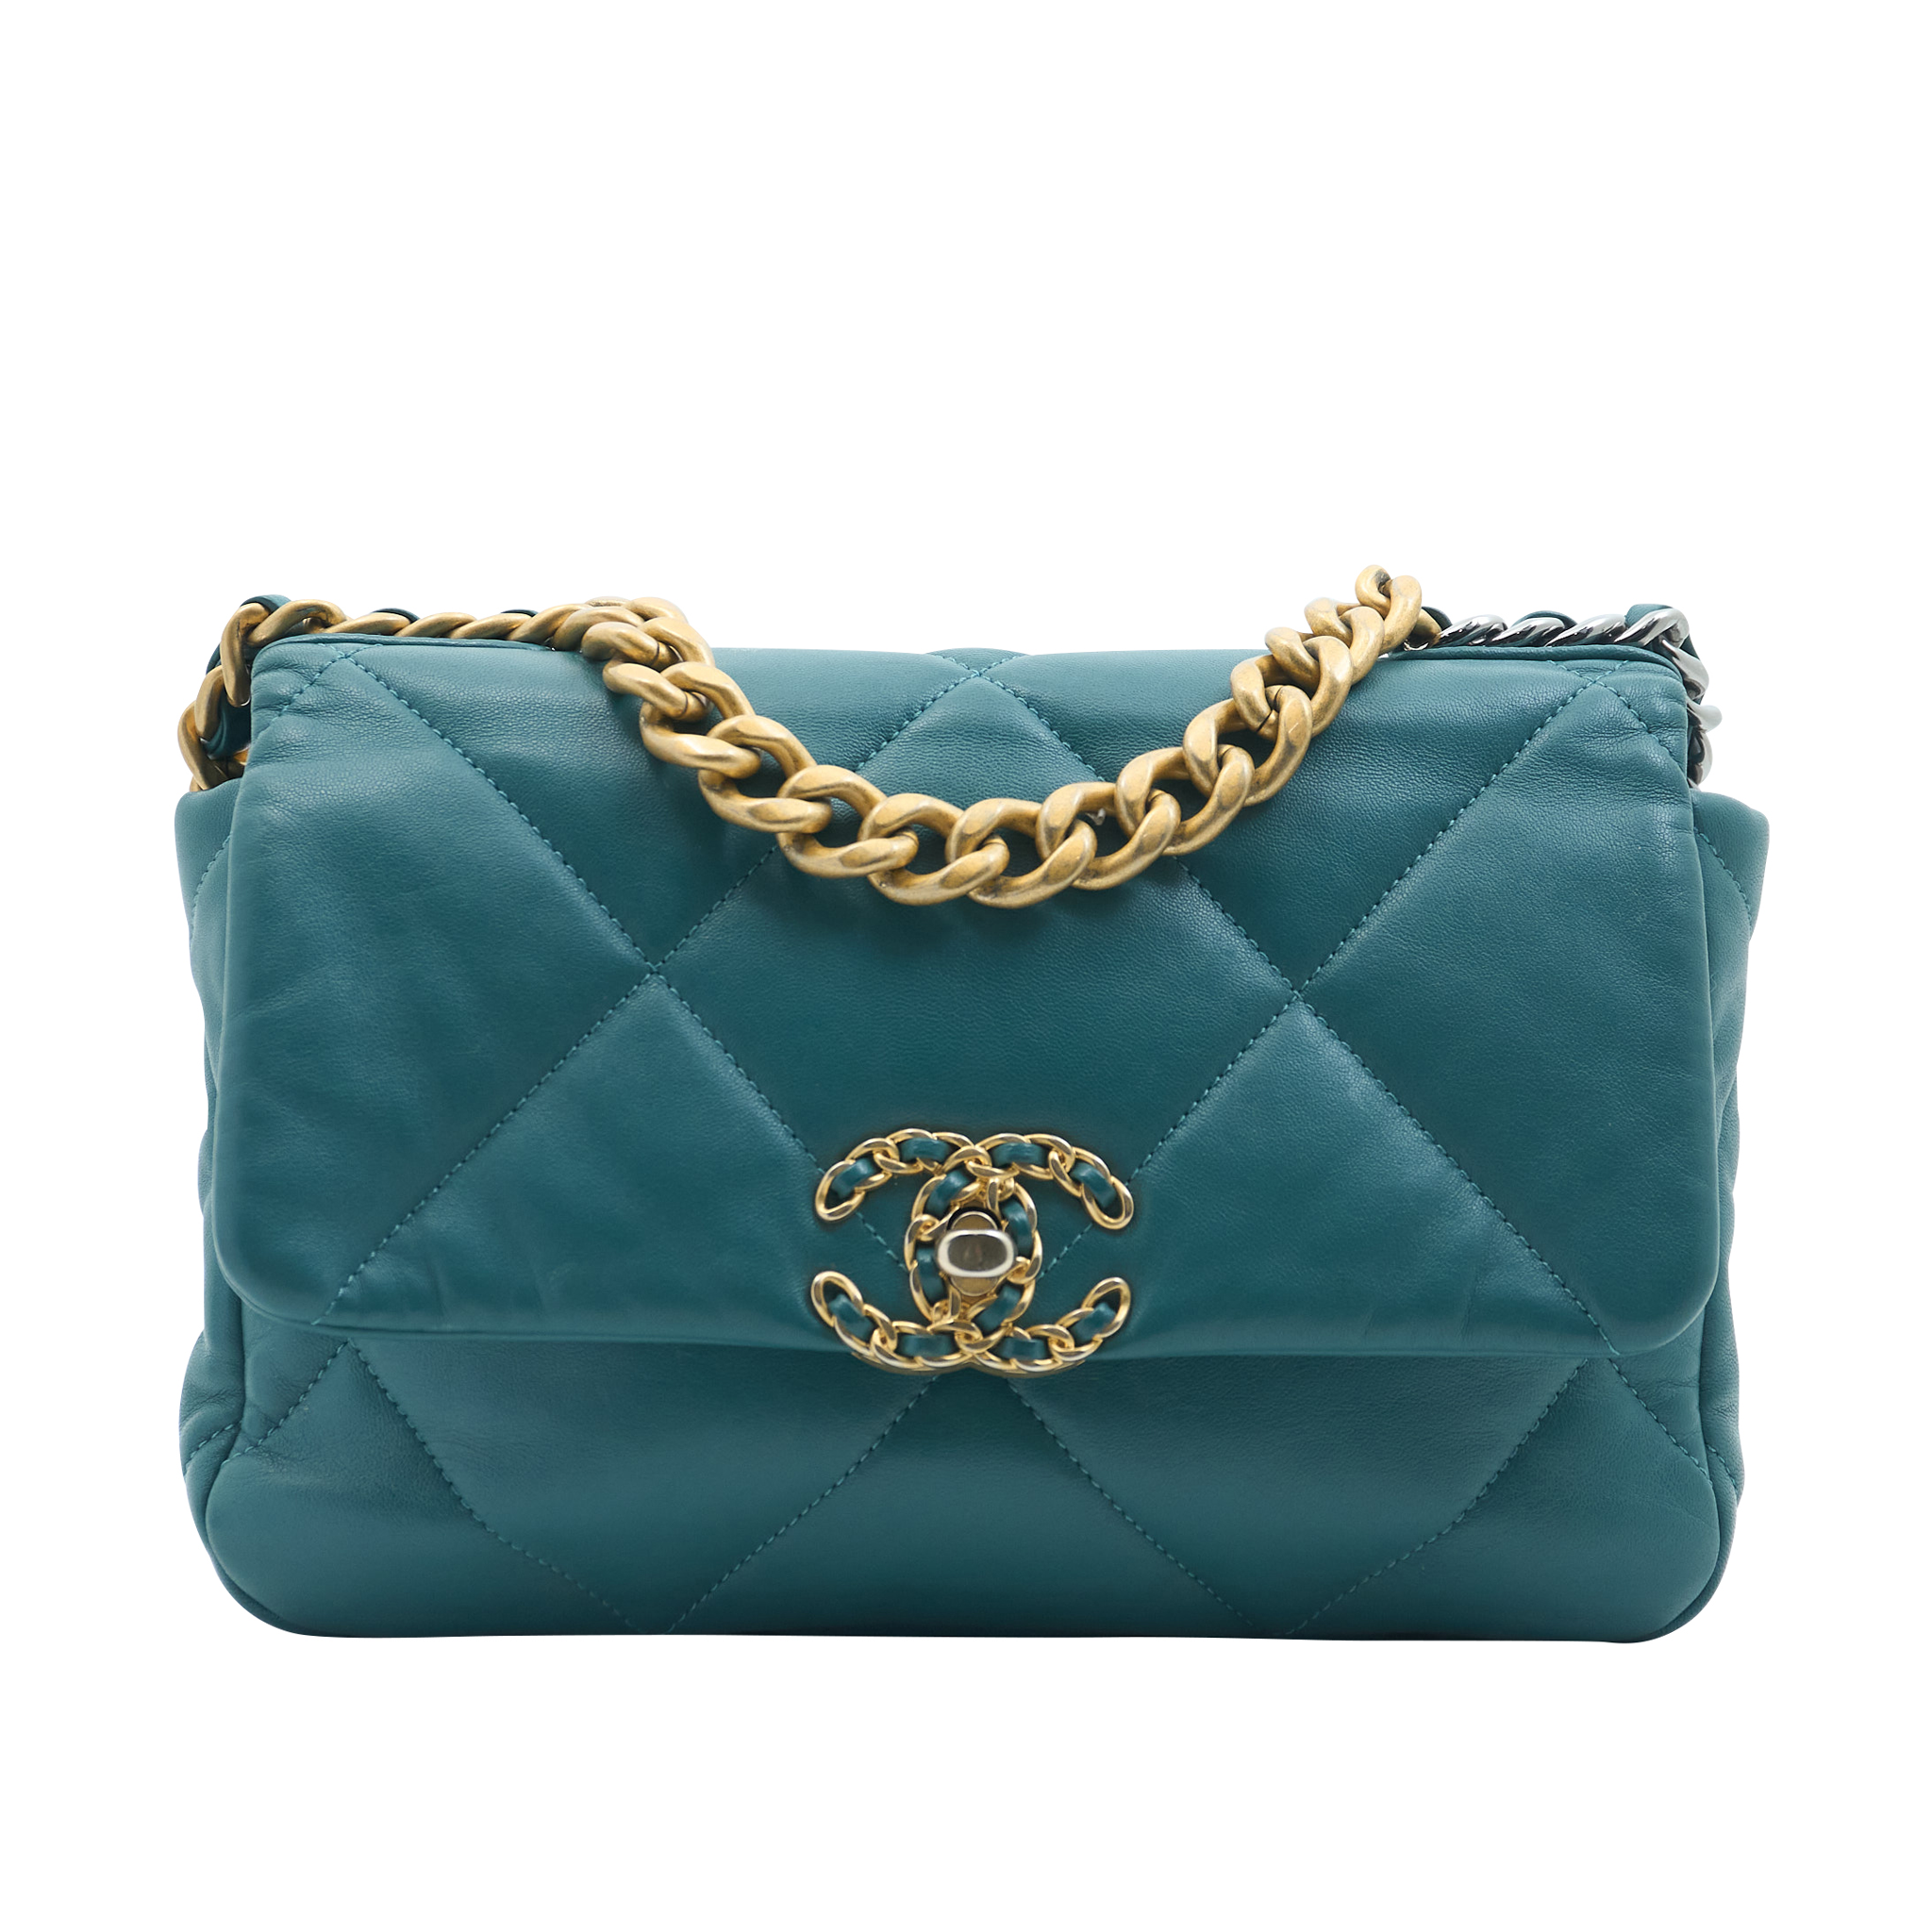 Chanel 19 Small Emerald Green Lambskin Bag